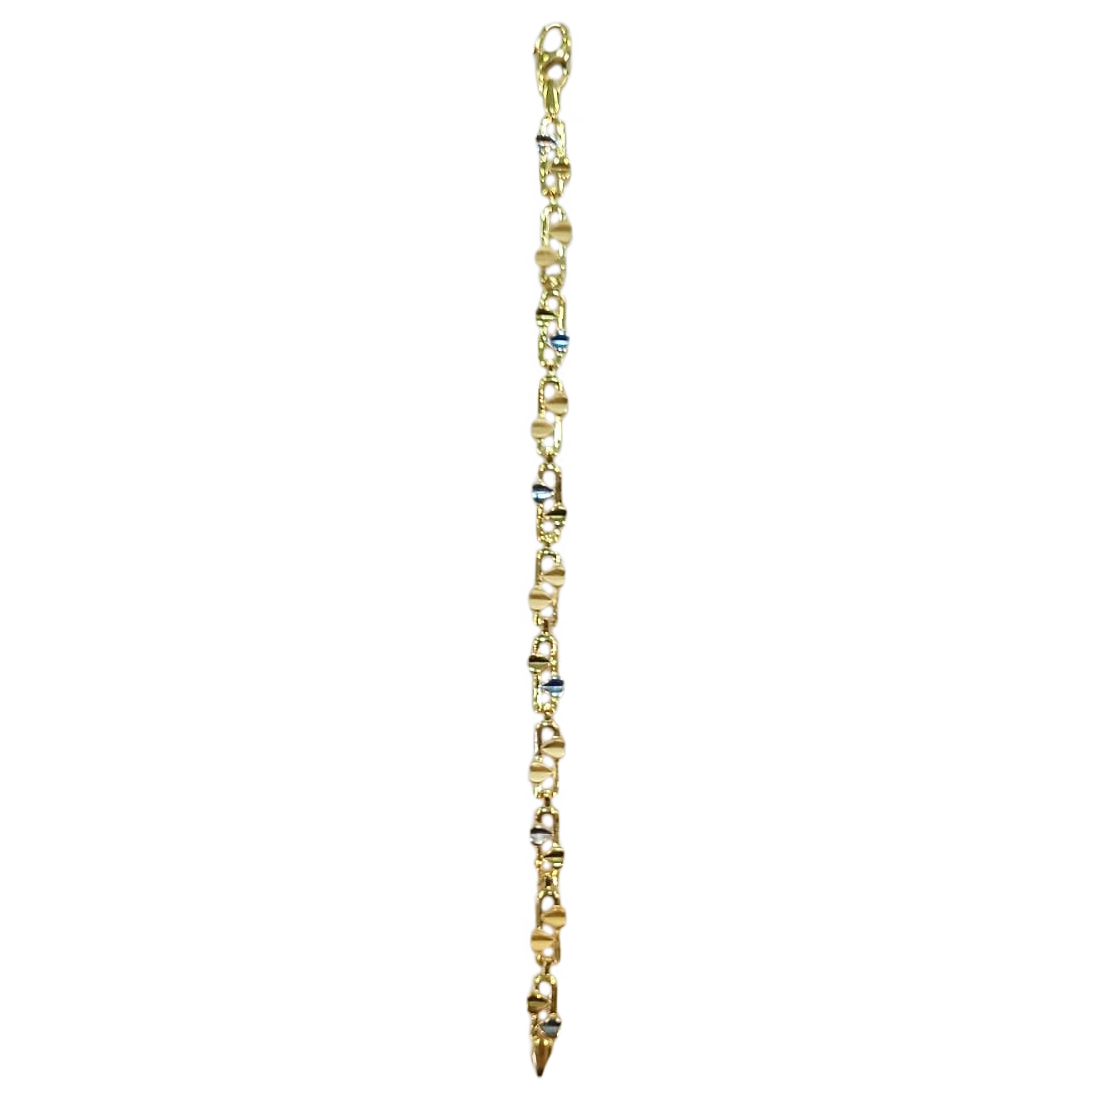 22k Gold Bangles Designs Price Dubai | India Jewelry 24k Gold Bangles -  Cuff Bracelet - Aliexpress